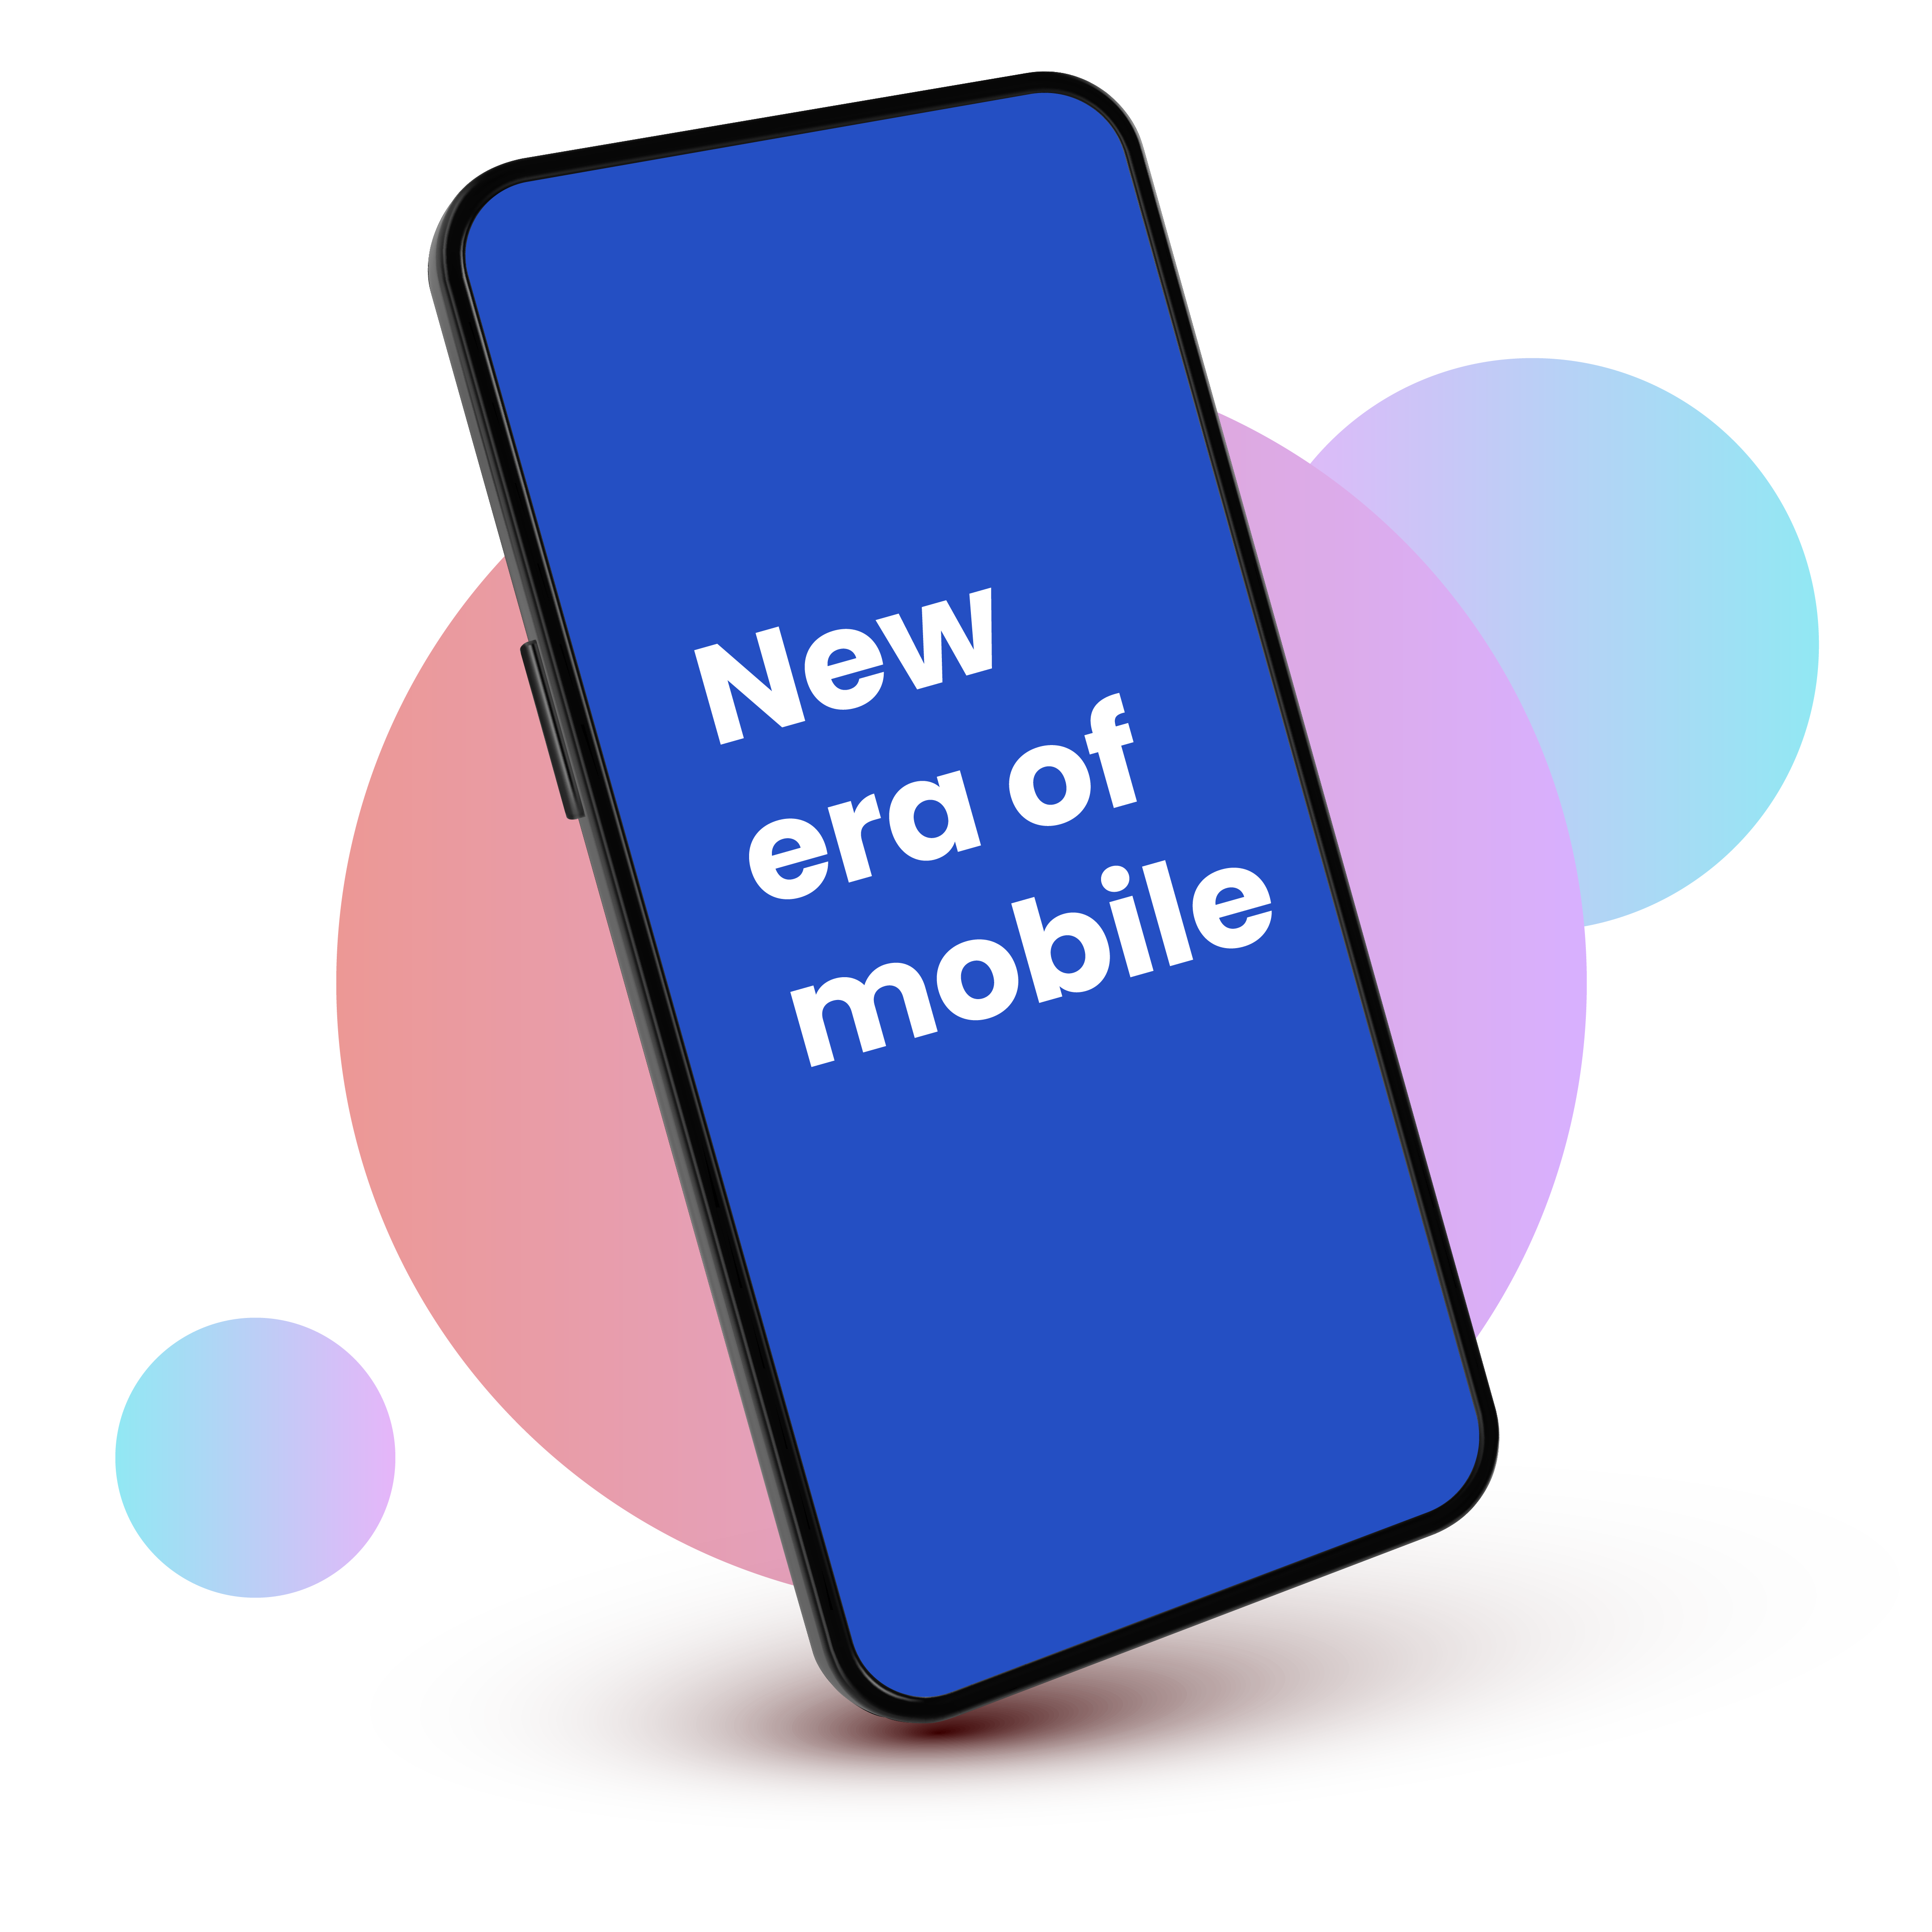 New era of mobile